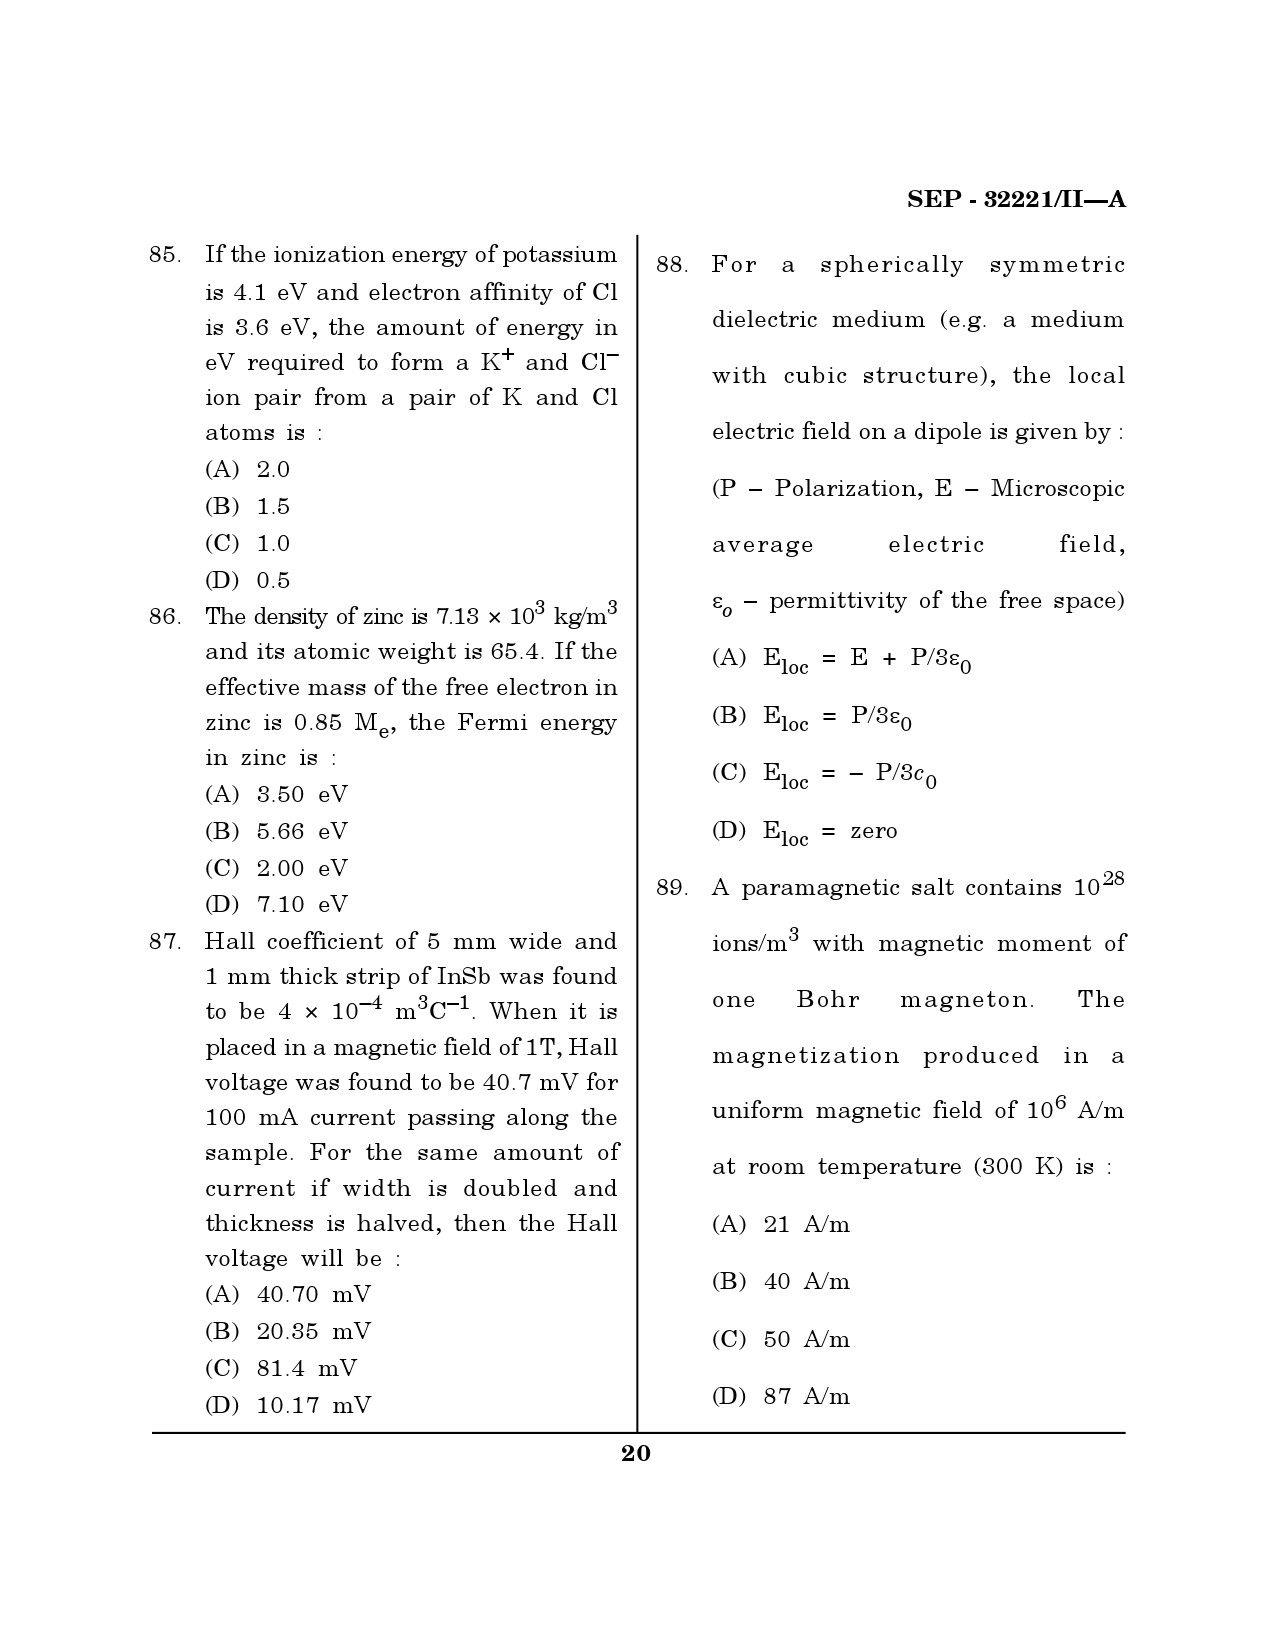 Maharashtra SET Physical Science Exam Question Paper September 2021 19